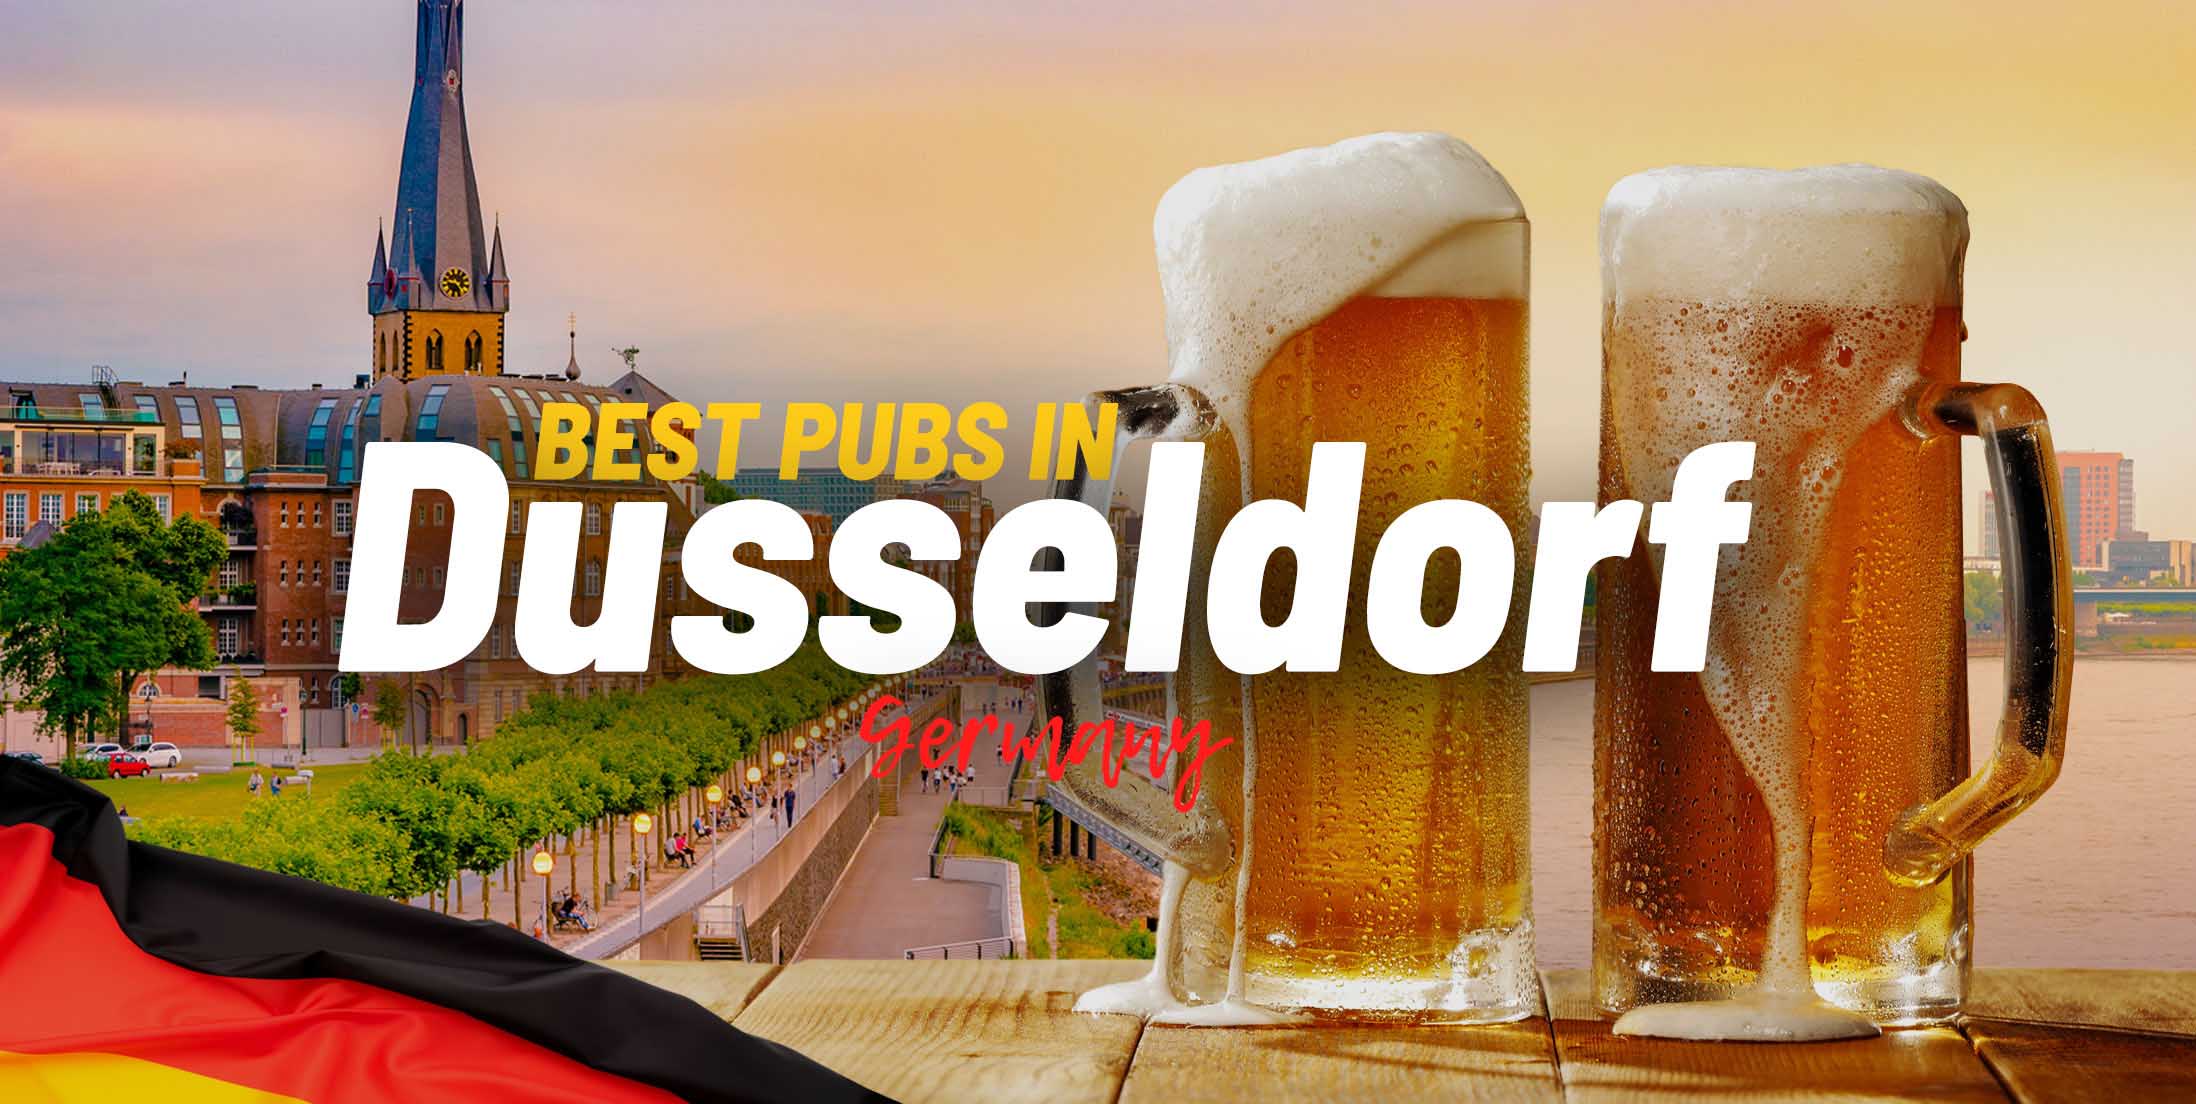 Best Pubs in Dusseldorf